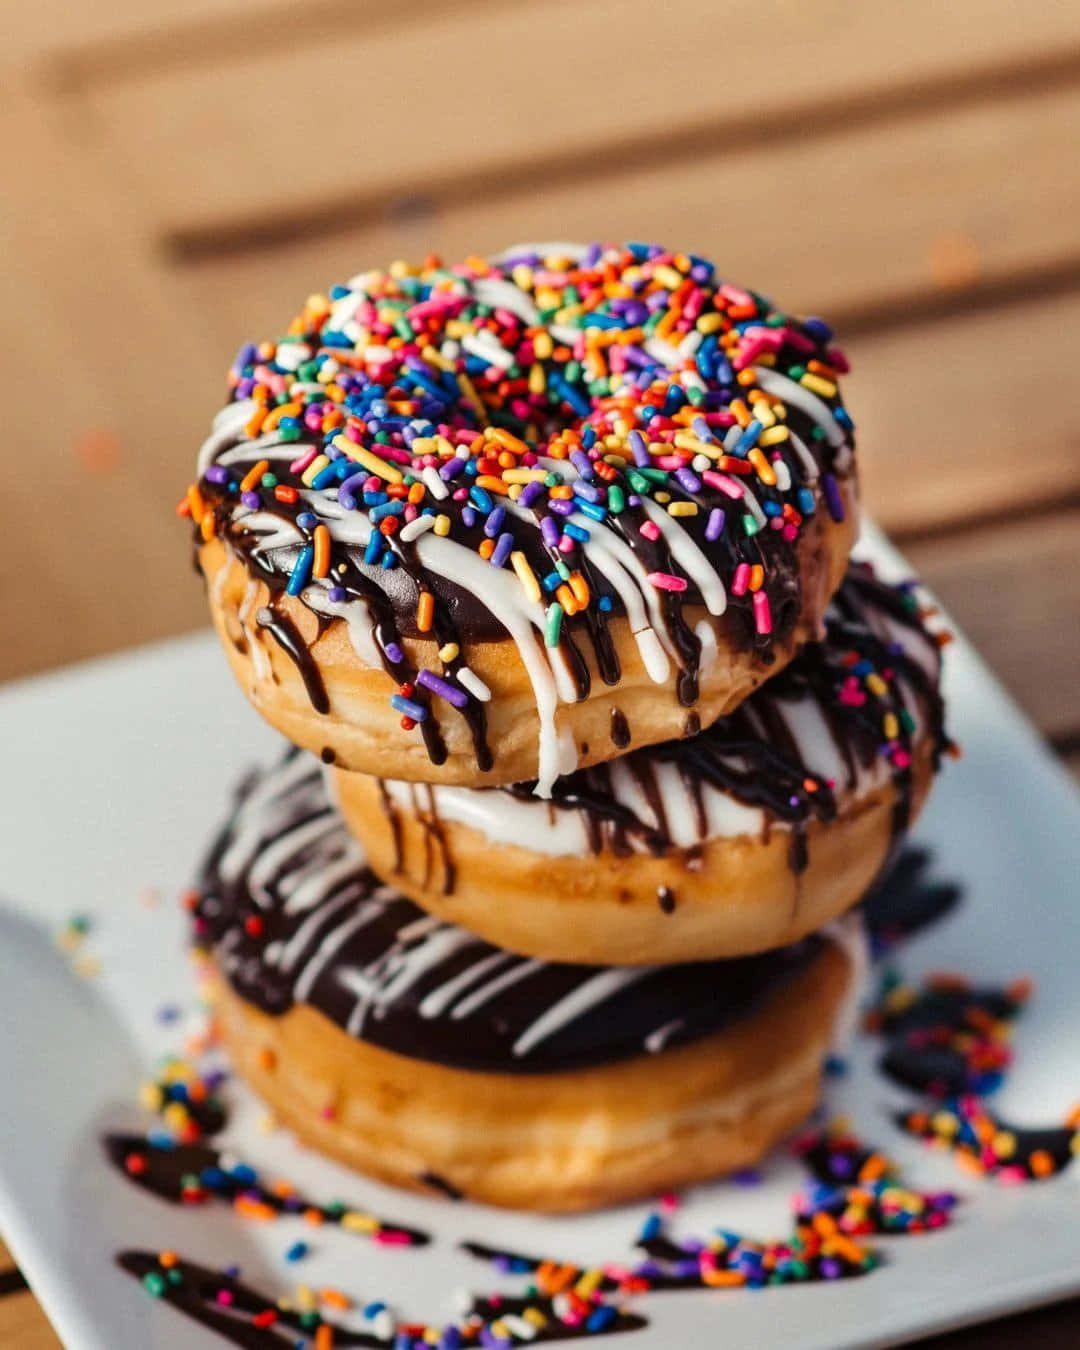 ¡disfrutadel Simple Placer Del Café Dunkin Donuts!